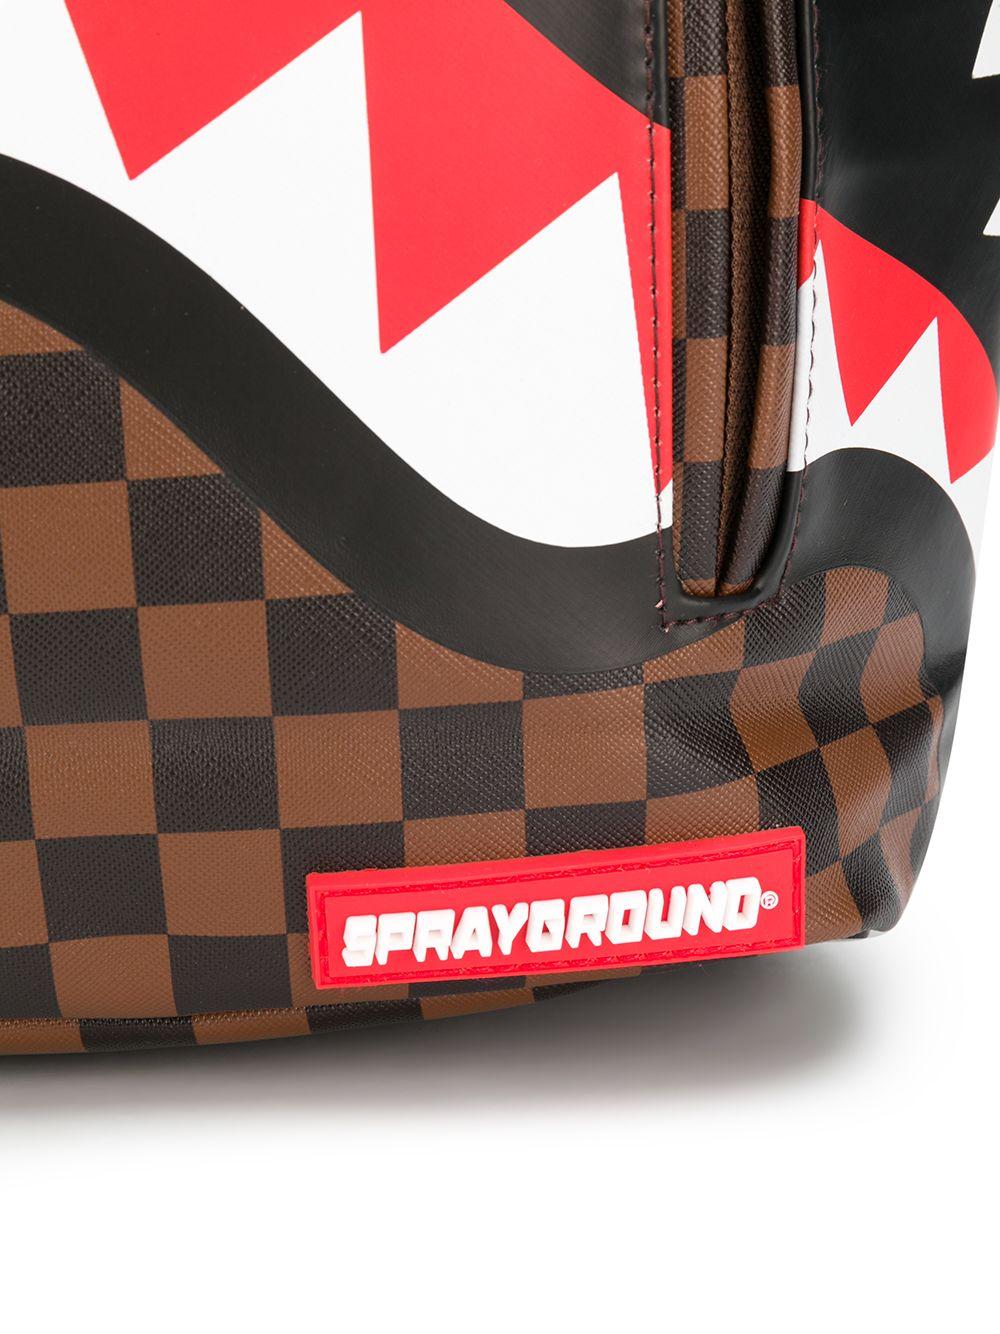 Sprayground - Sharks in Paris Painted Hard Luggage Brown